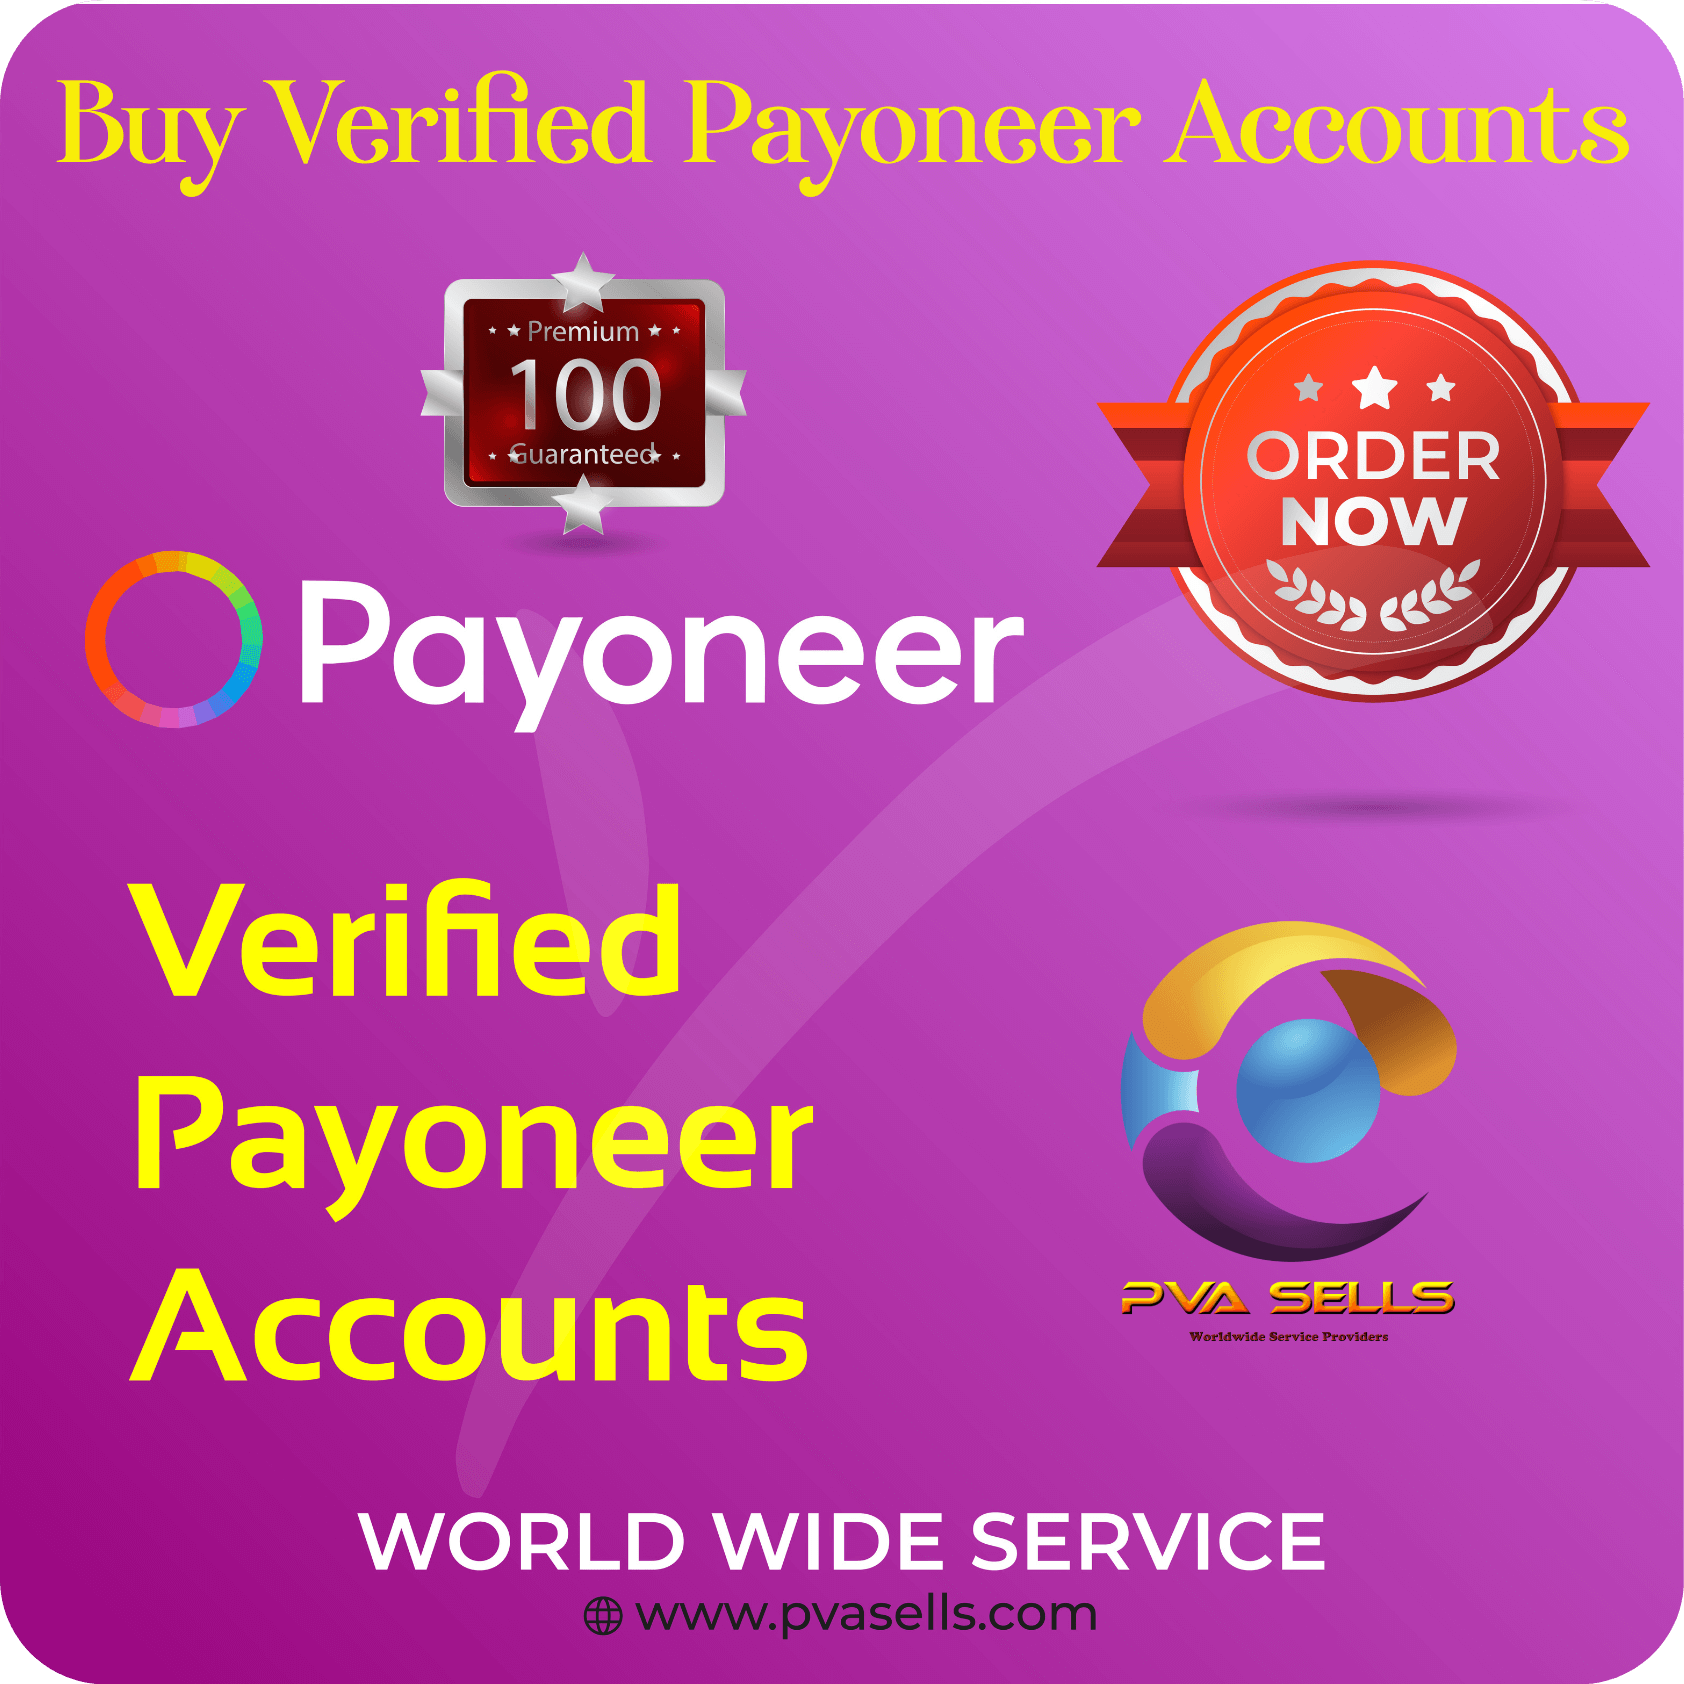 Buy Verified Payoneer Account - 100% Full Verified Account...